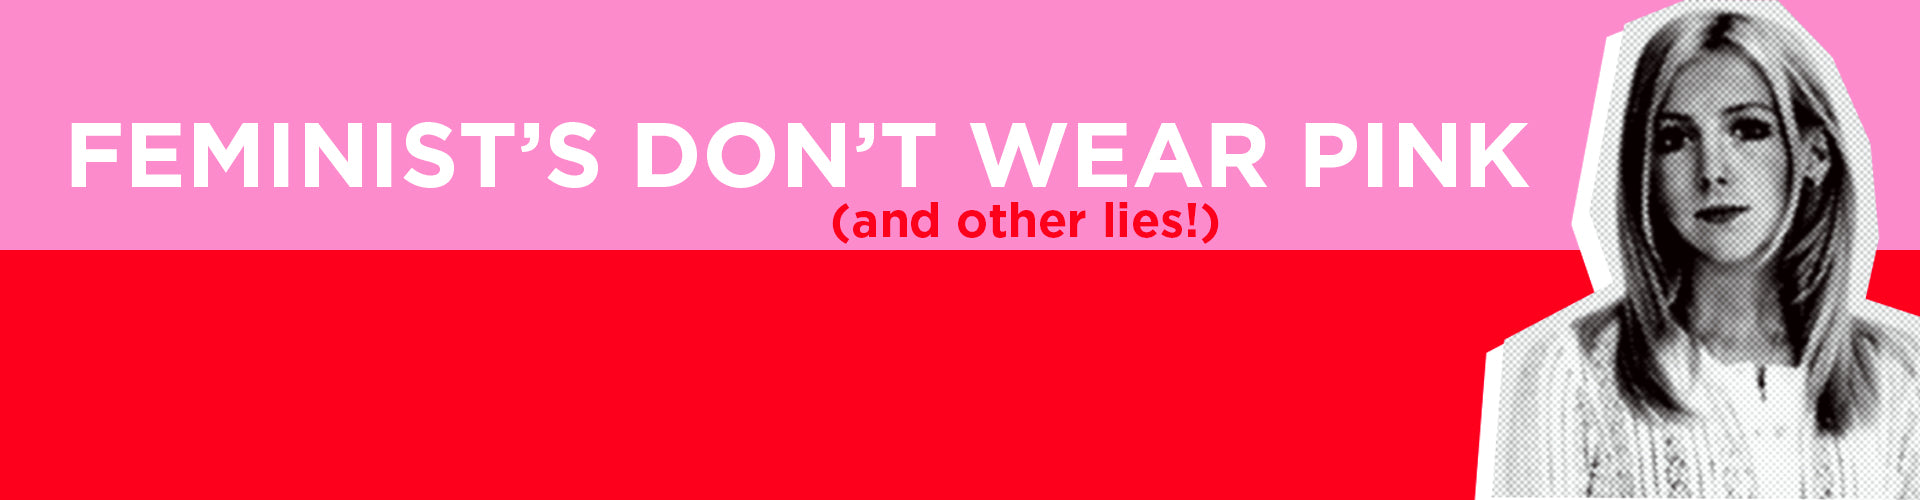 Feminist Don't Wear Pink